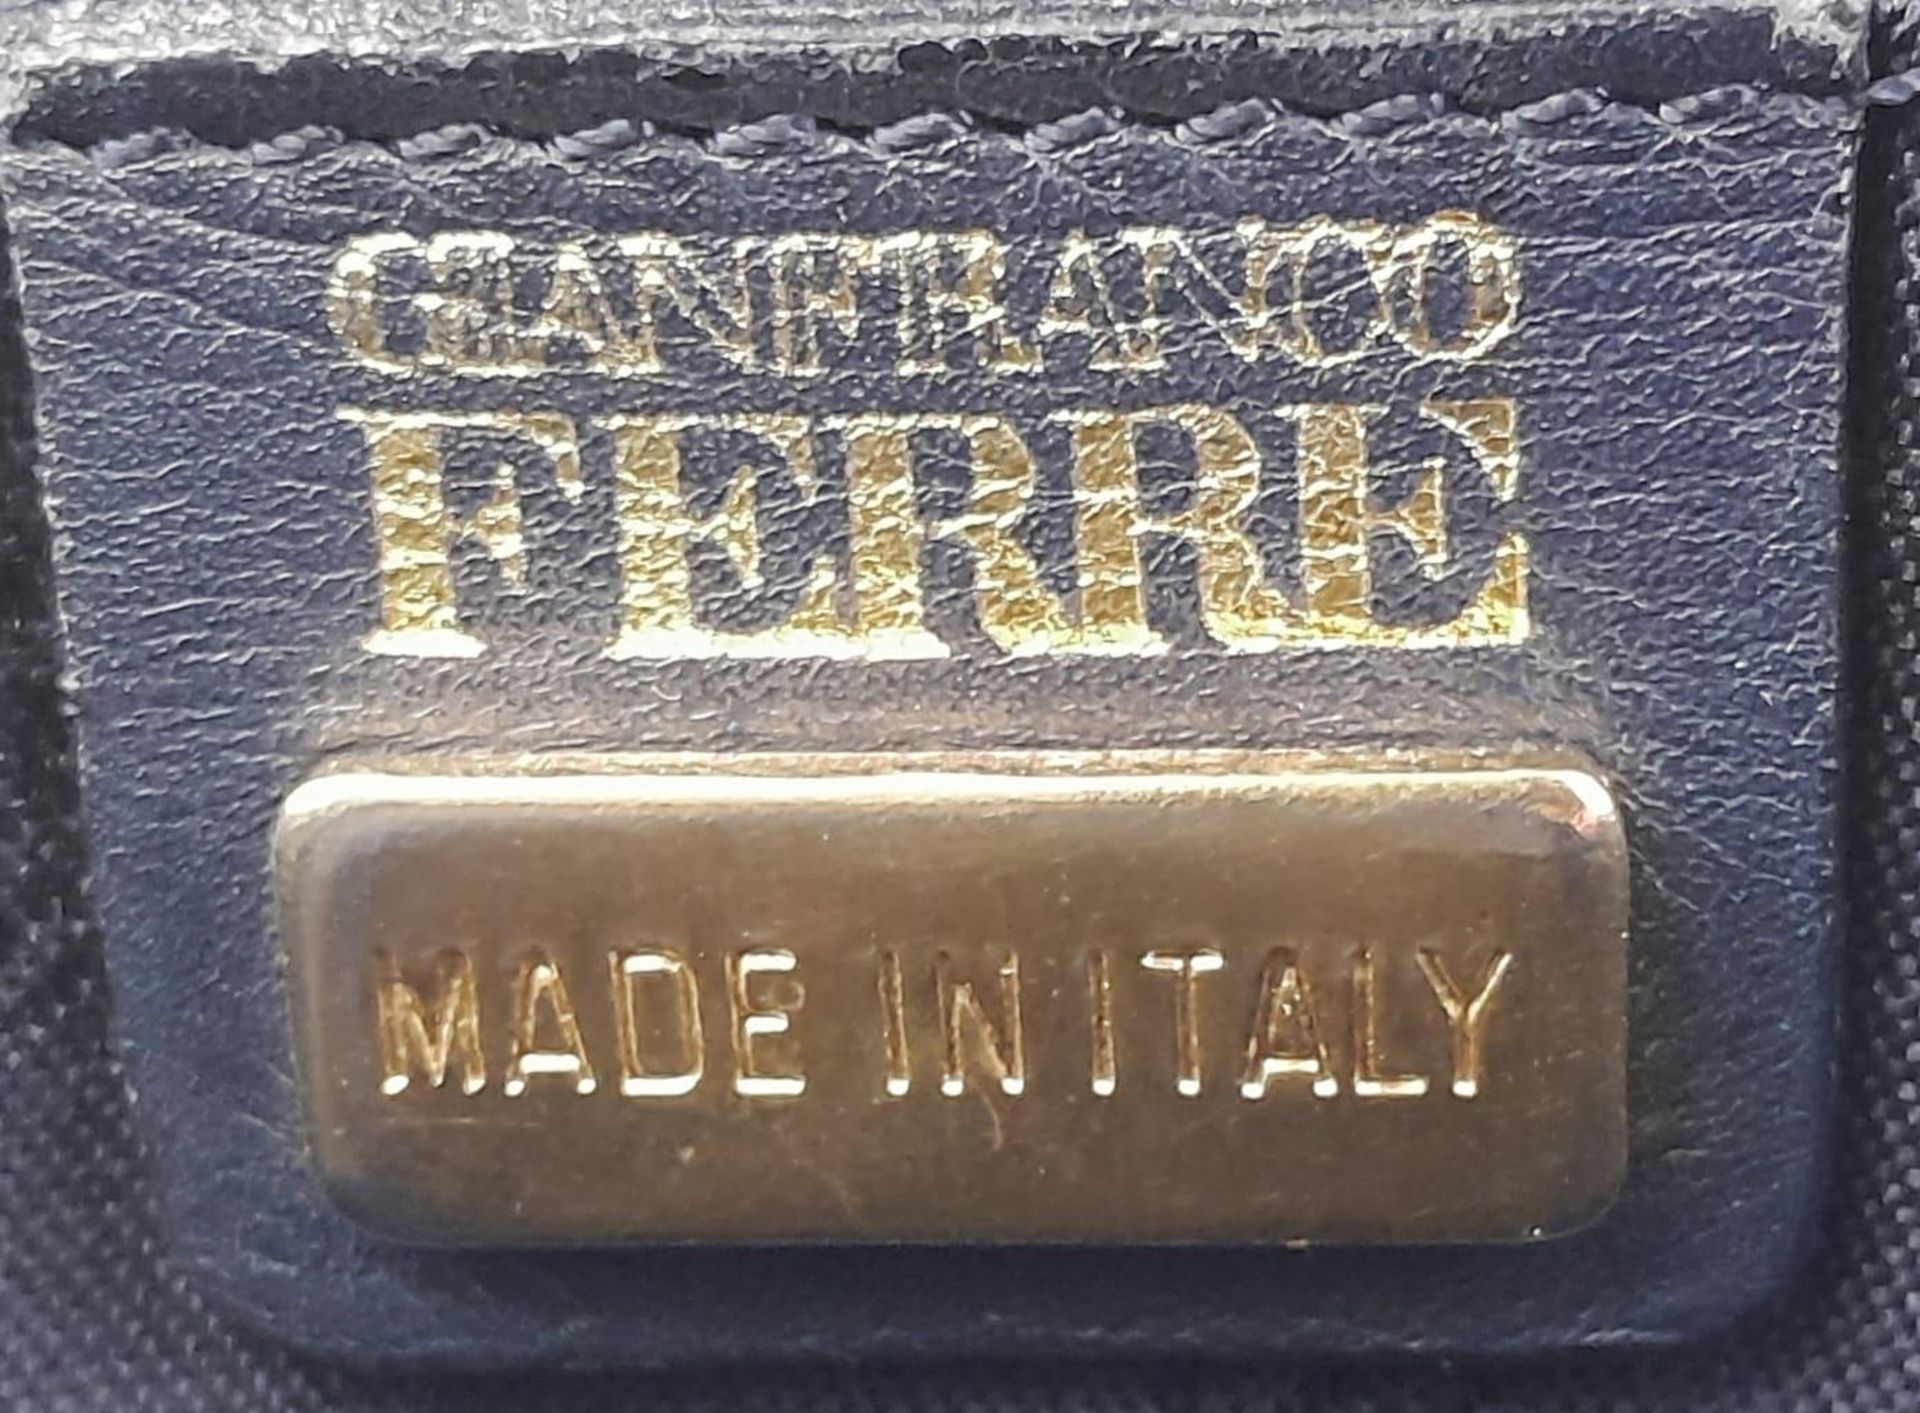 Vintage Gianfranco Ferre Bag. A large, blue leather bag with gold tone hardware. Measures 39cm - Image 6 of 7